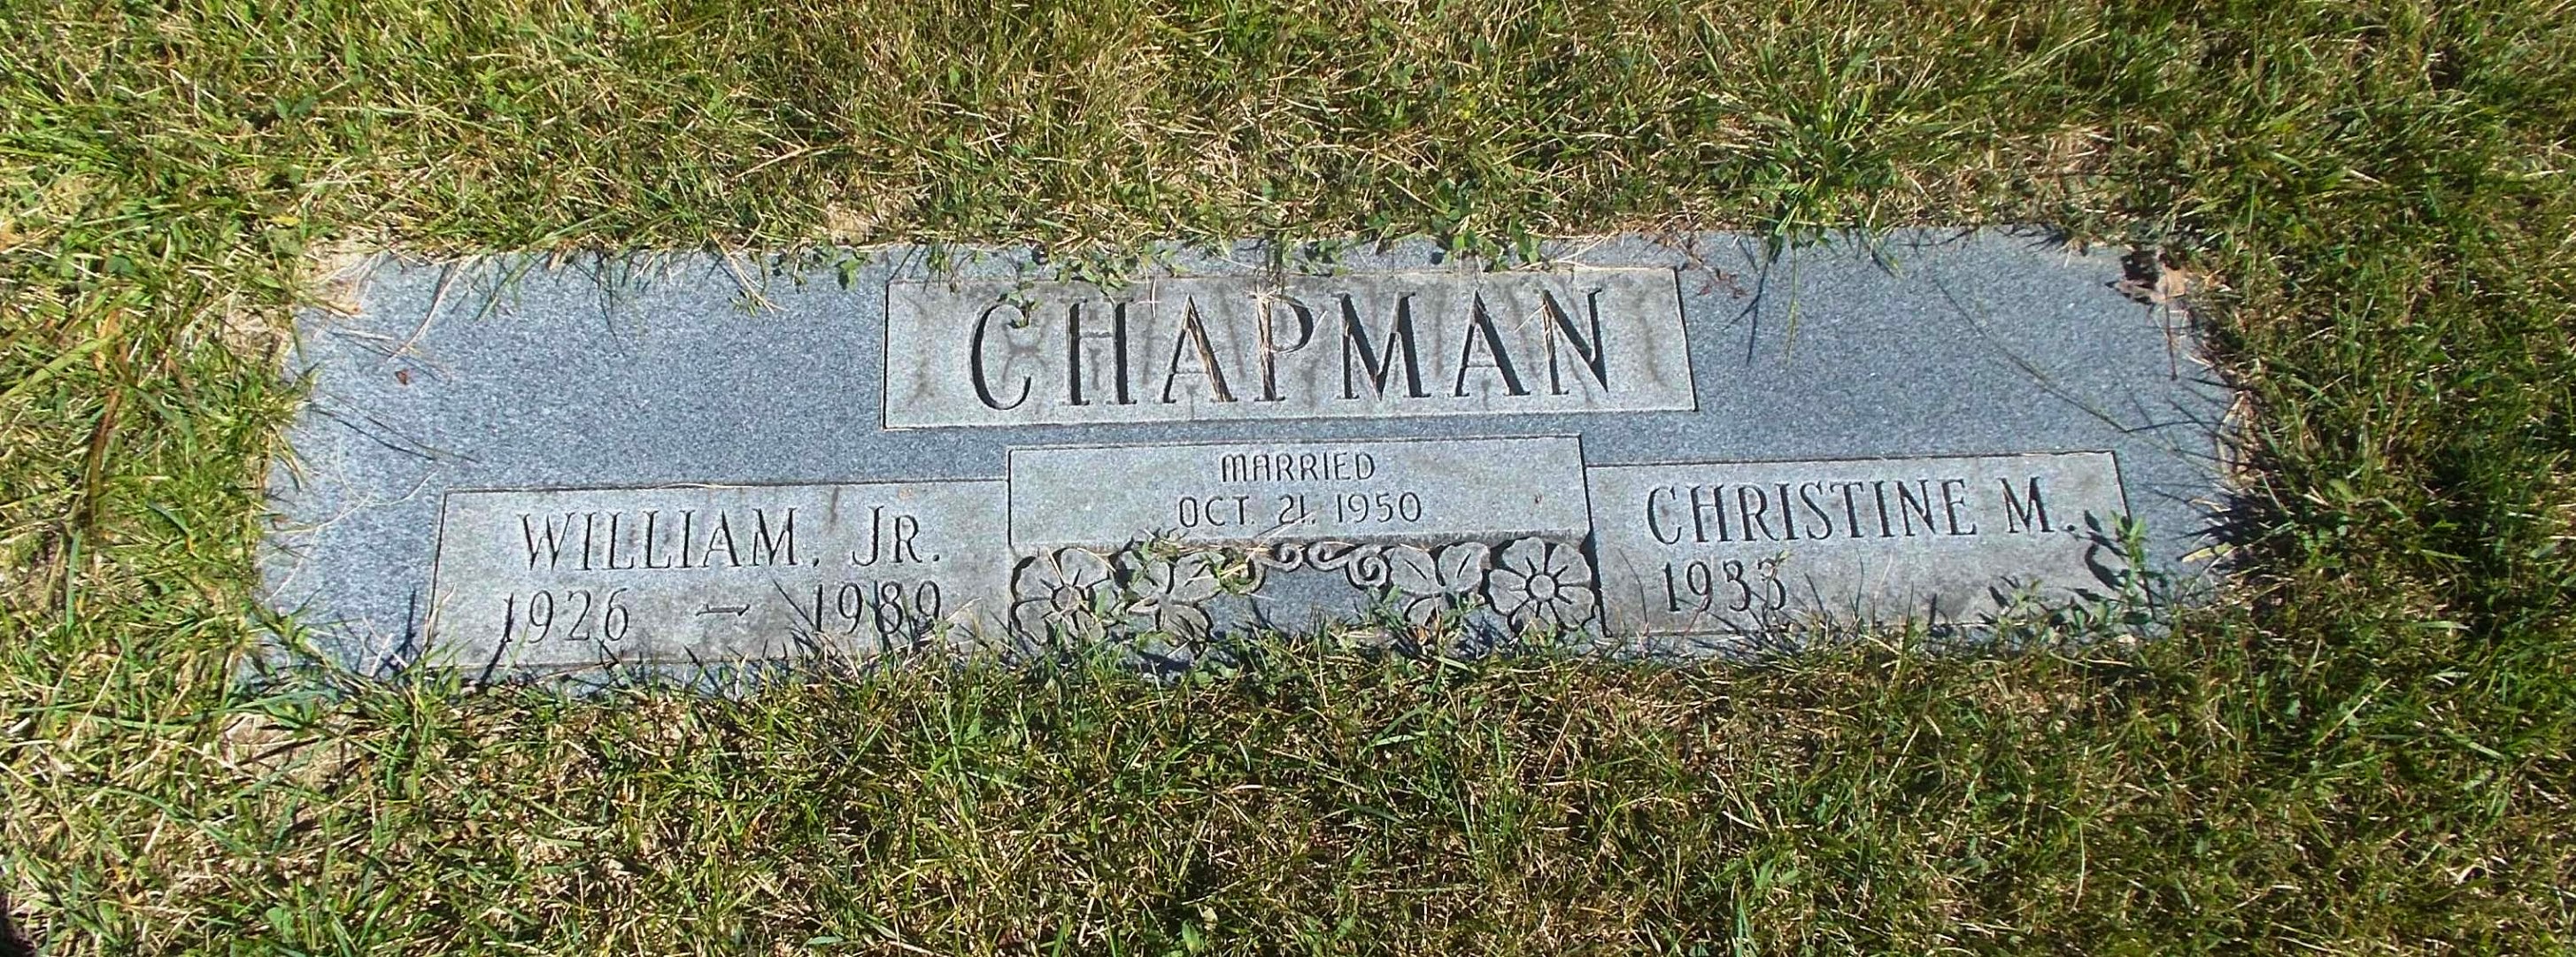 William Chapman, Jr